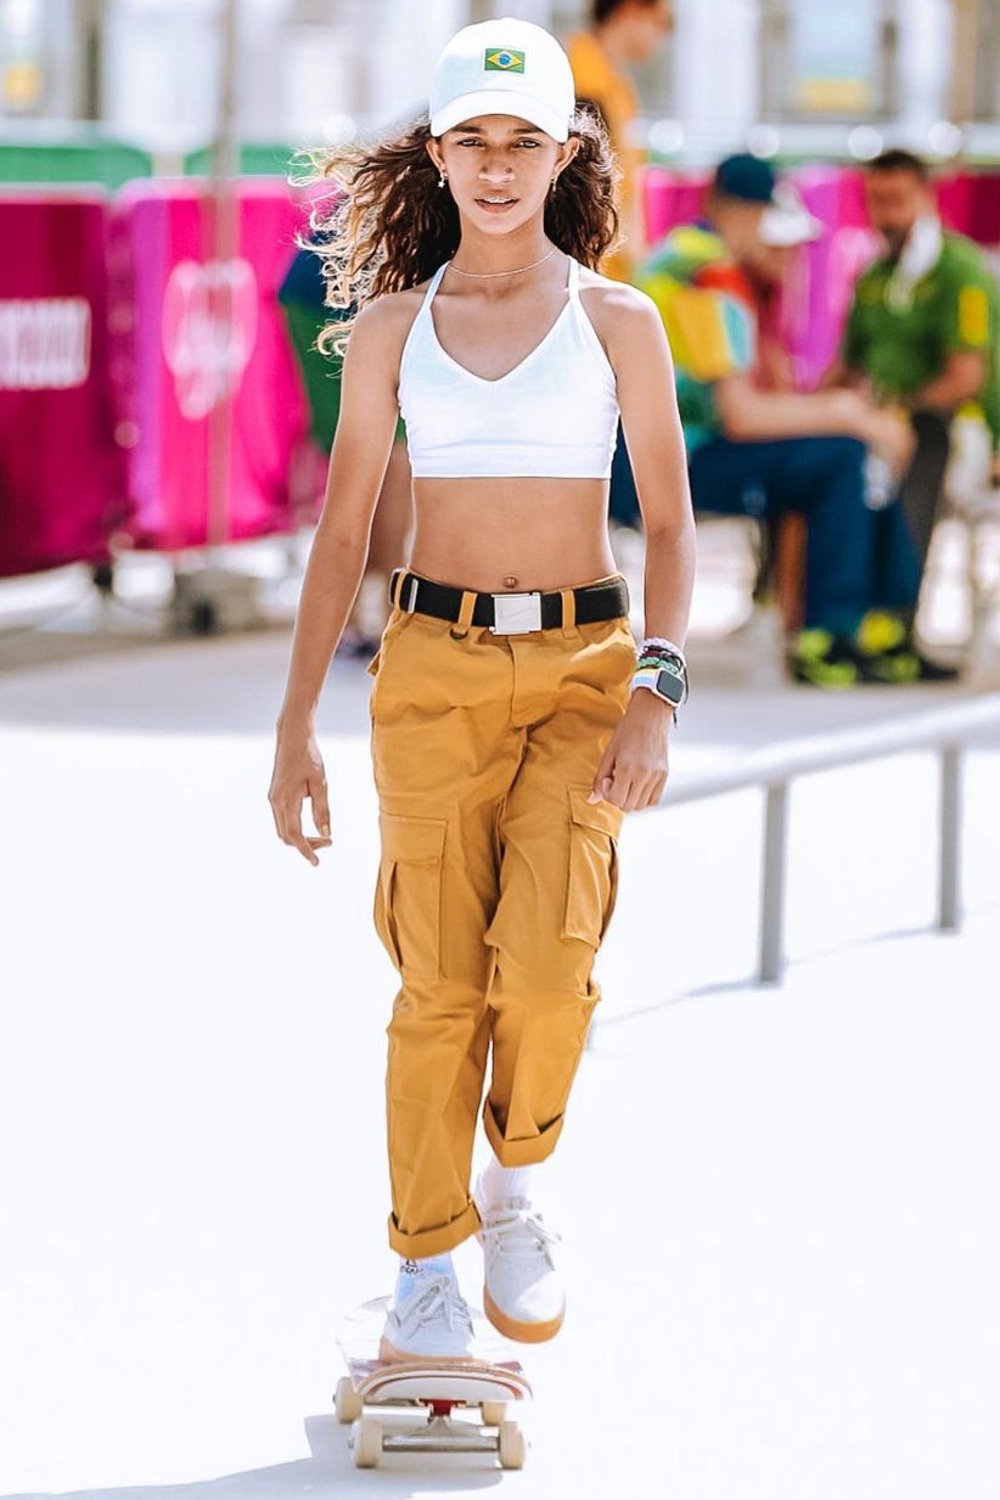 Rayssa Leal - fashion - melhores looks - moda - street style - https://stealthelook.com.br